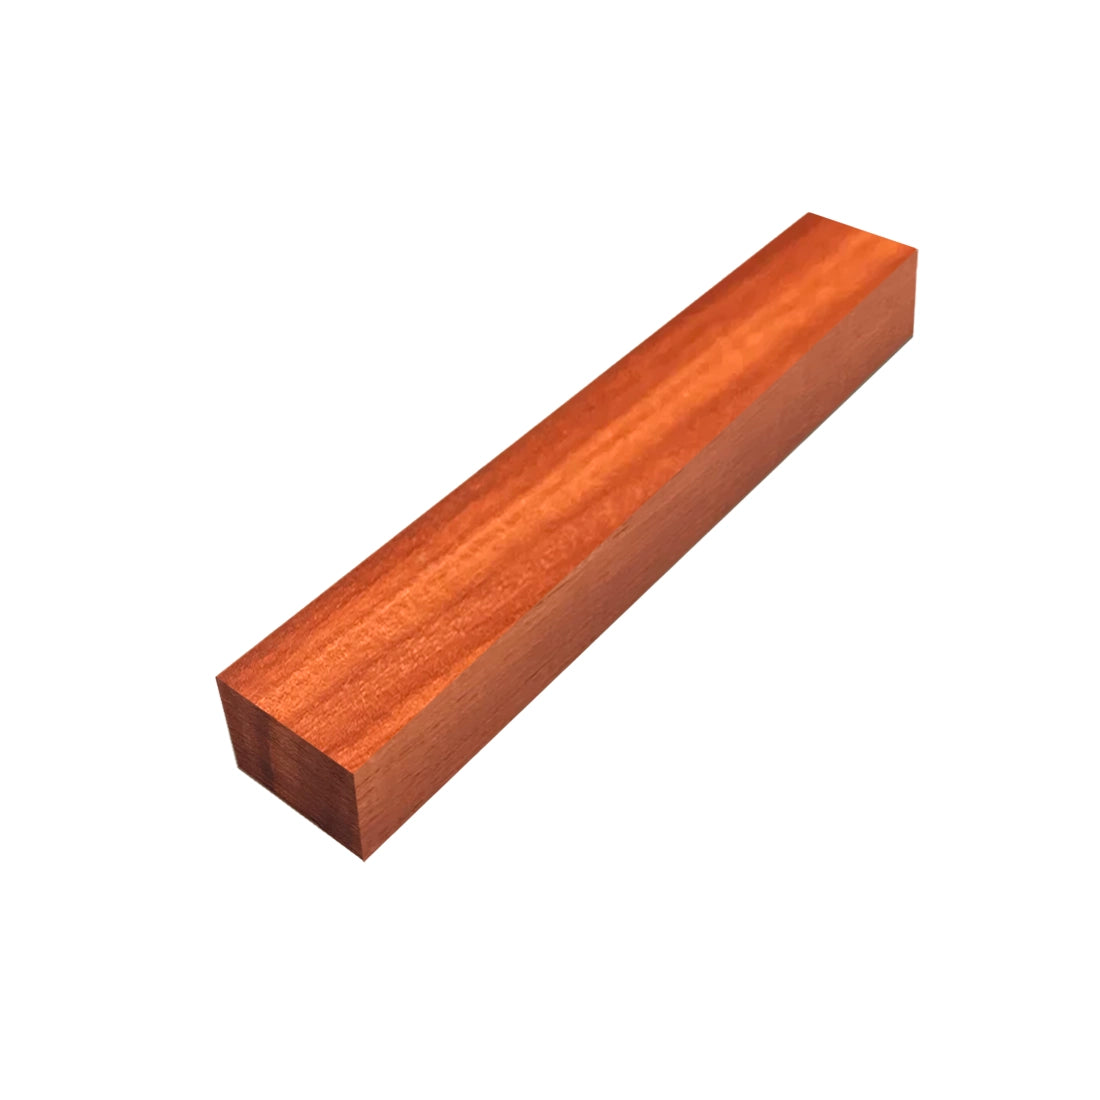 Bloodwood Inlay Wood Blanks 1/4” x 1-1/2“ x 9” - Exotic Wood Zone - Buy online Across USA 